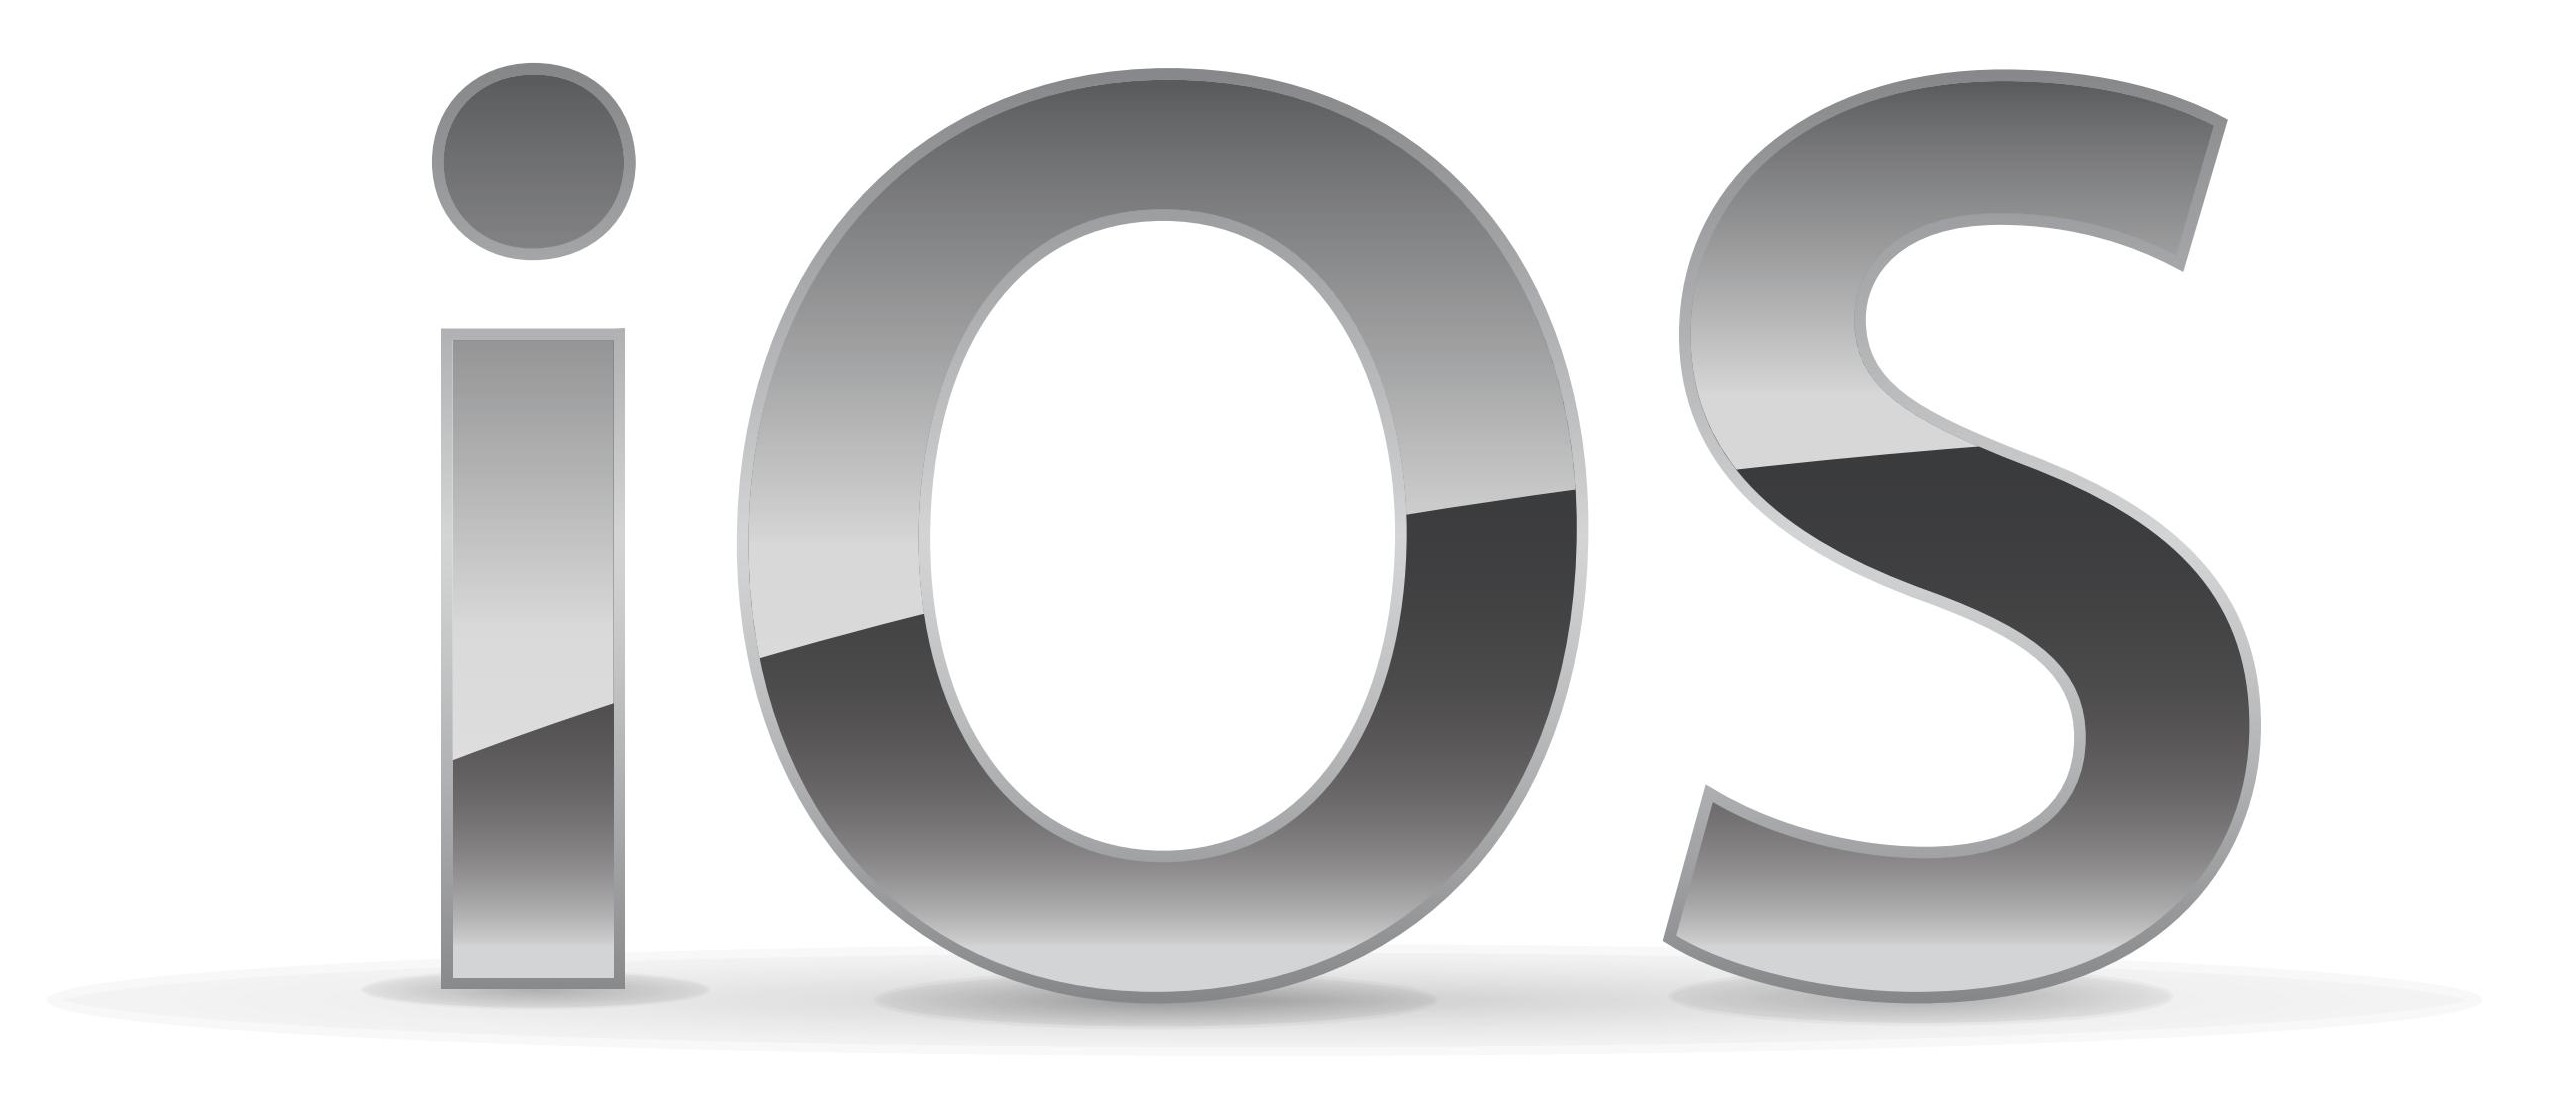 File:IOS 9 Logo.png